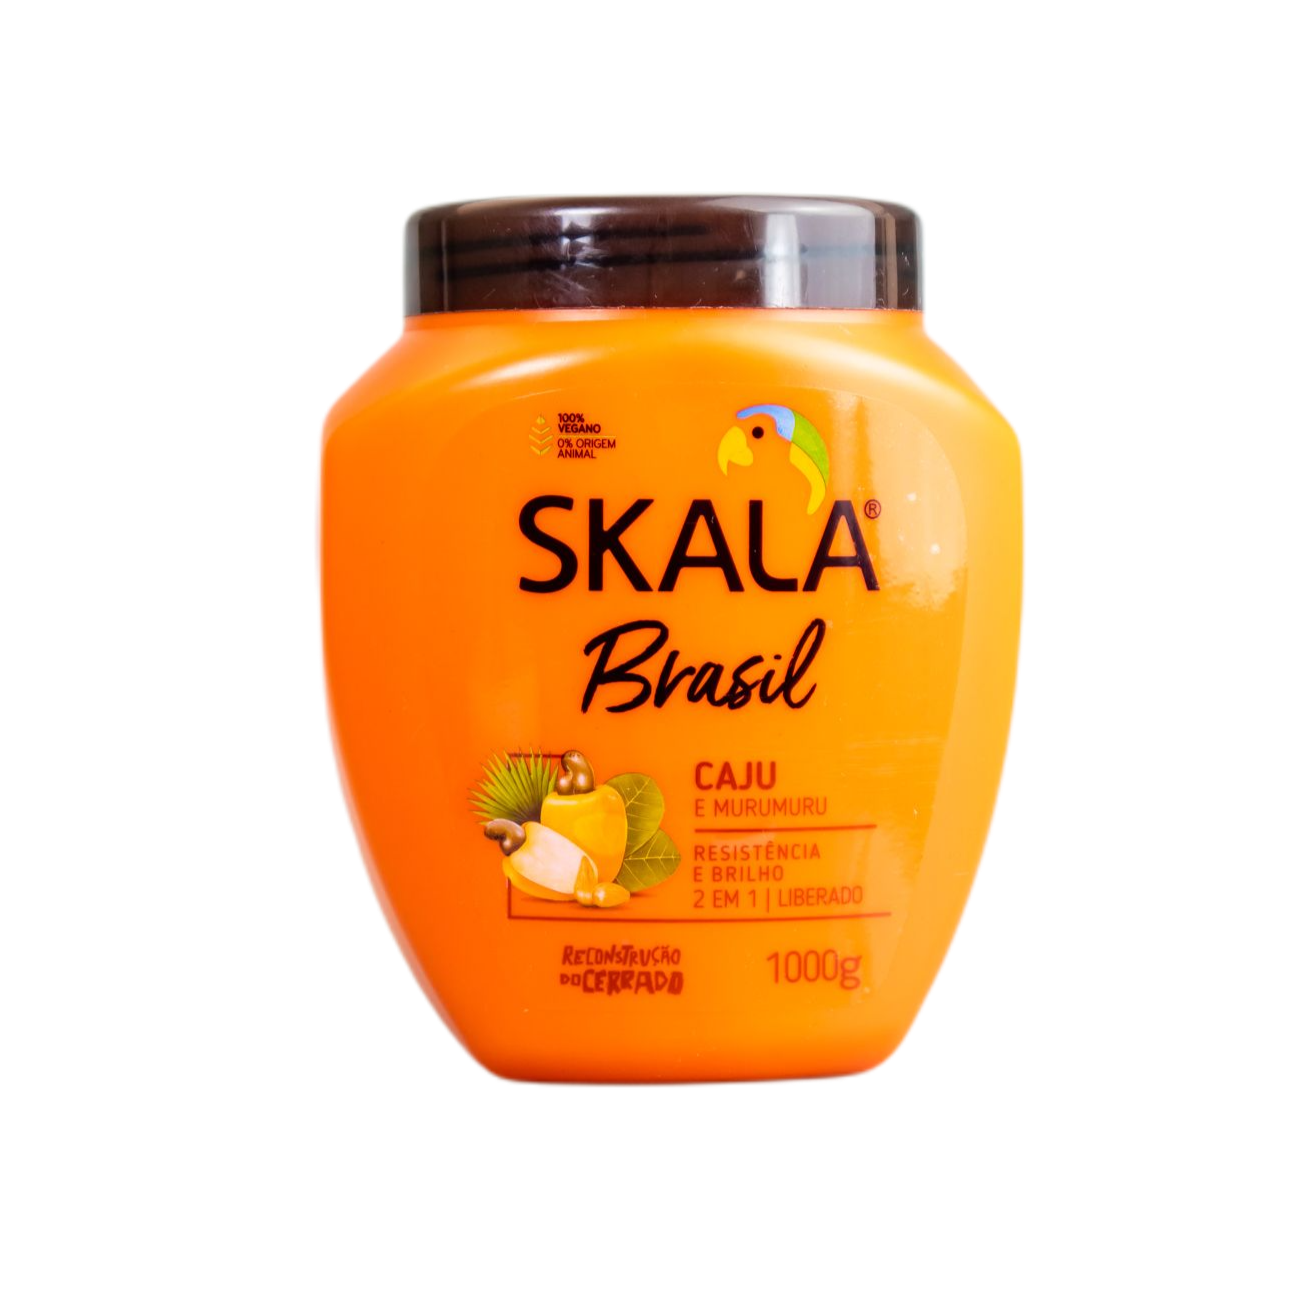 SKALA New Hair Treatment Cream 1000G Maracuja And Oleo De Pataua